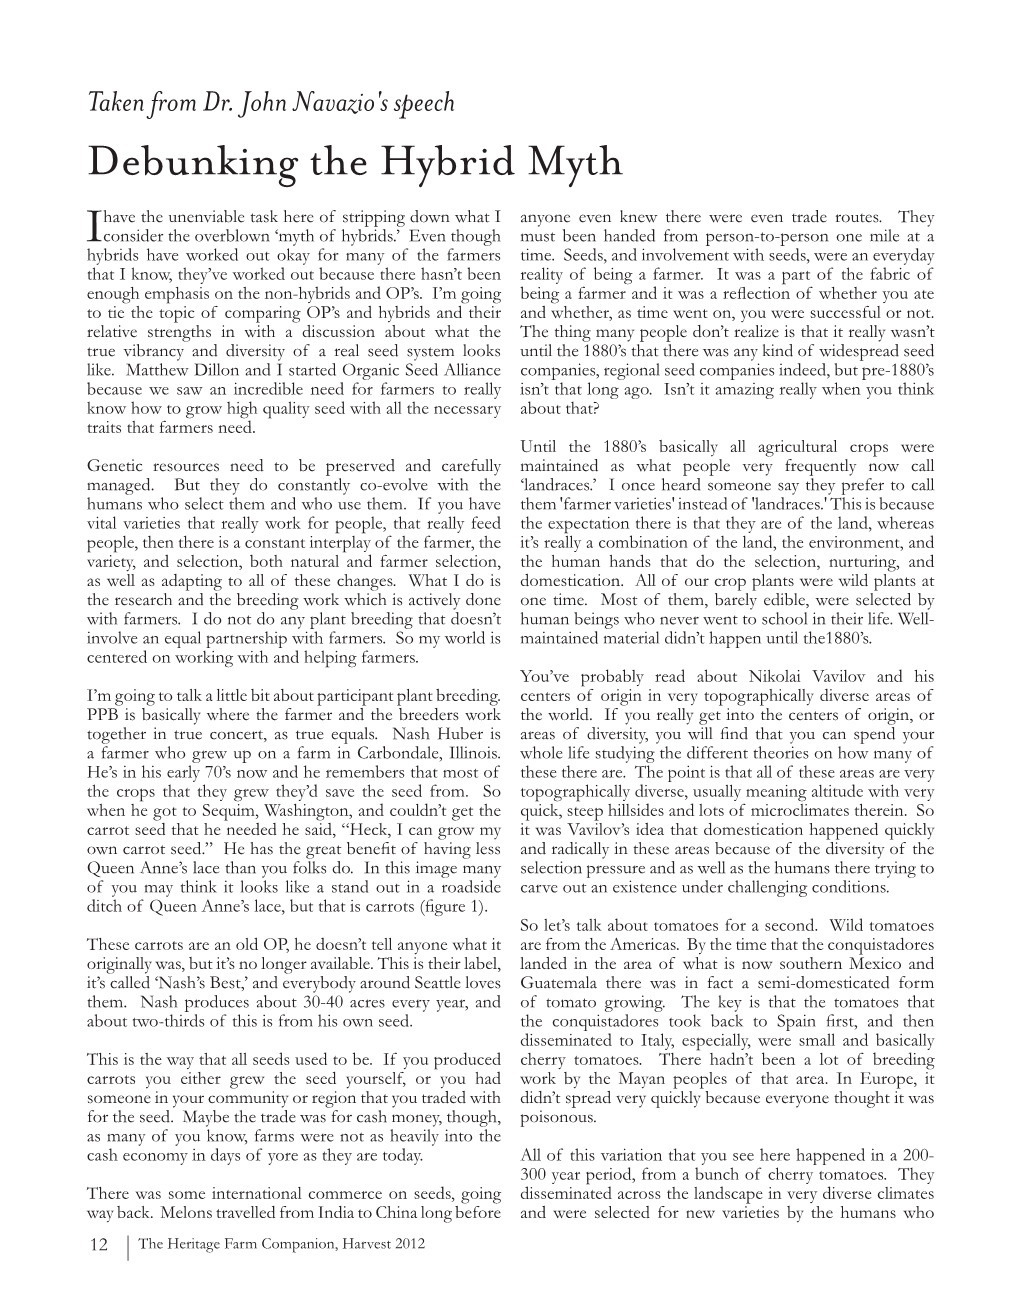 Debunking the Hybrid Myth